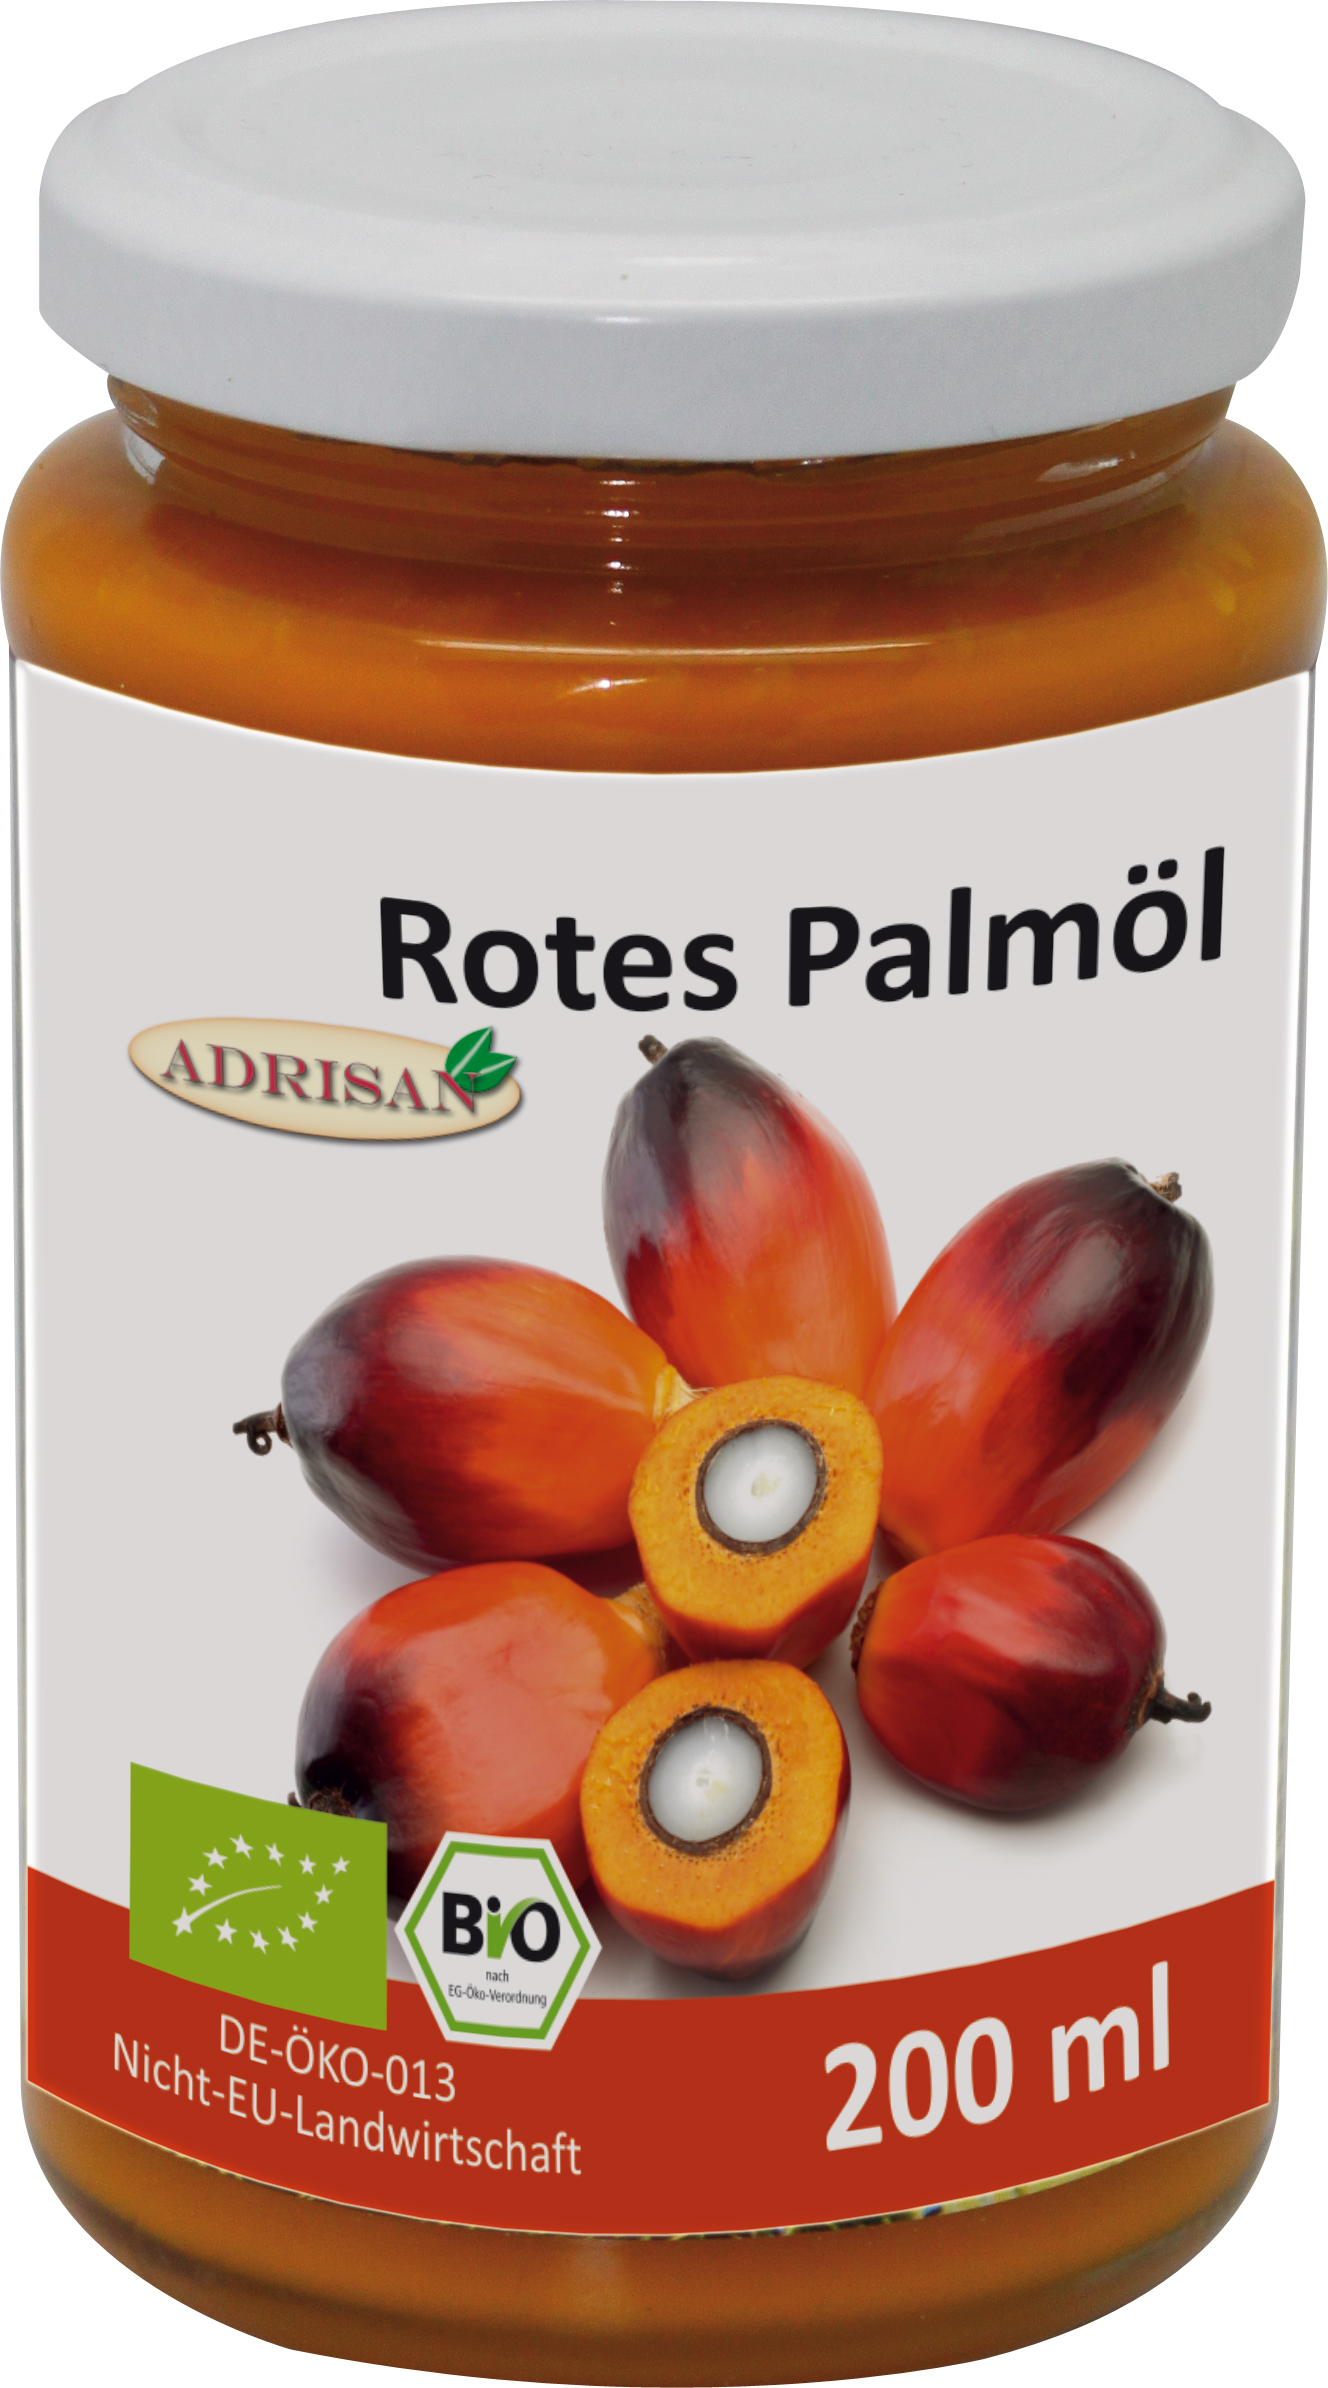 Adrisan Rotes Palm Öl 200 ml